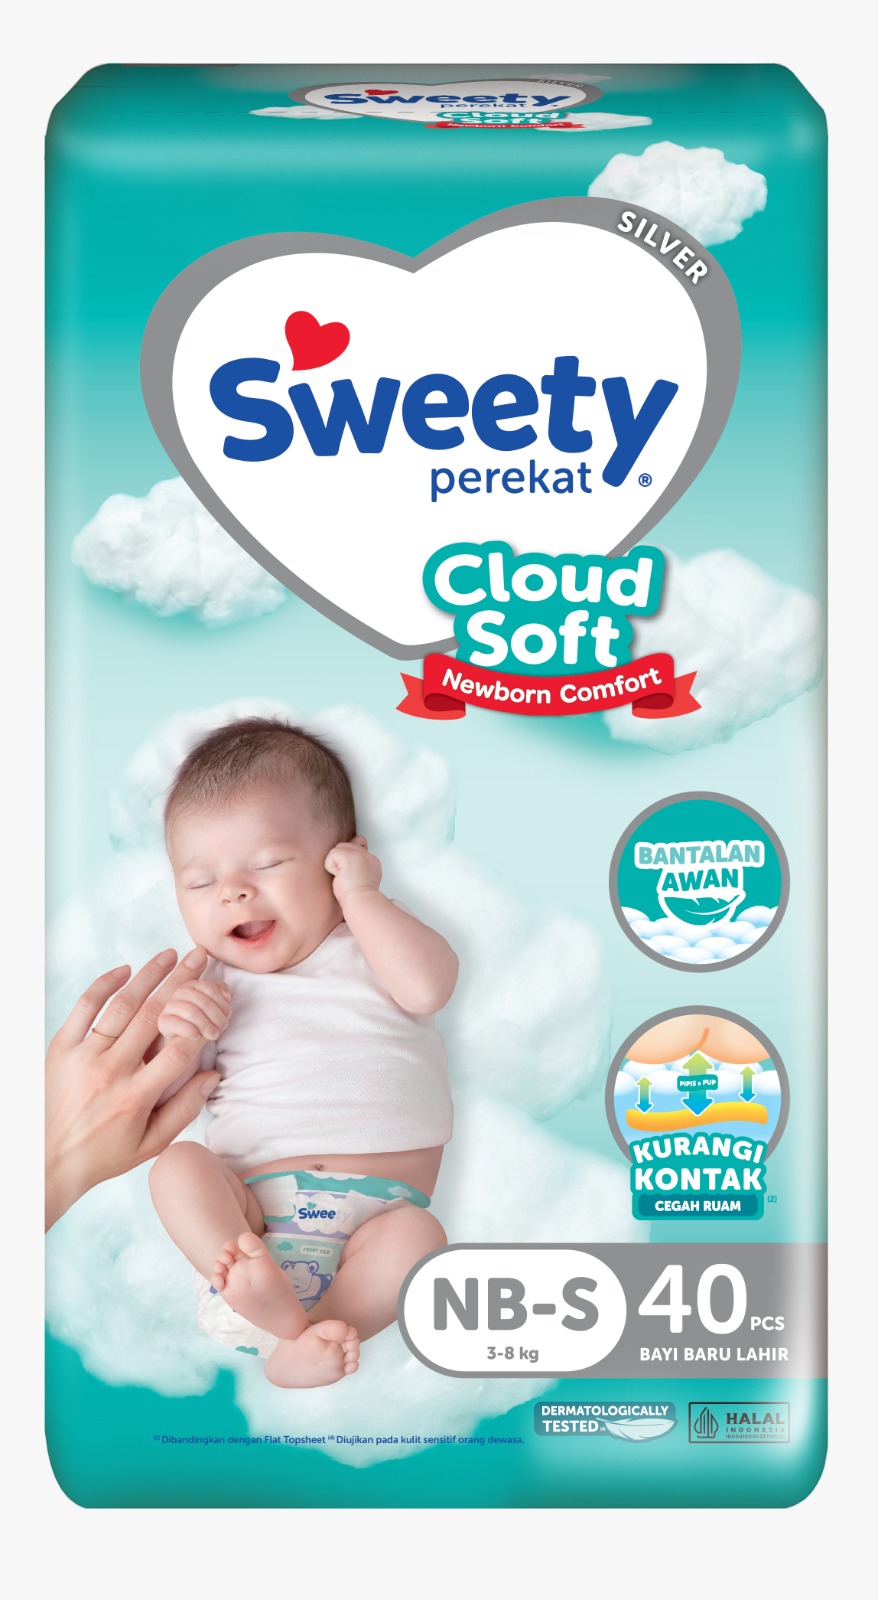 Sweety softcloud